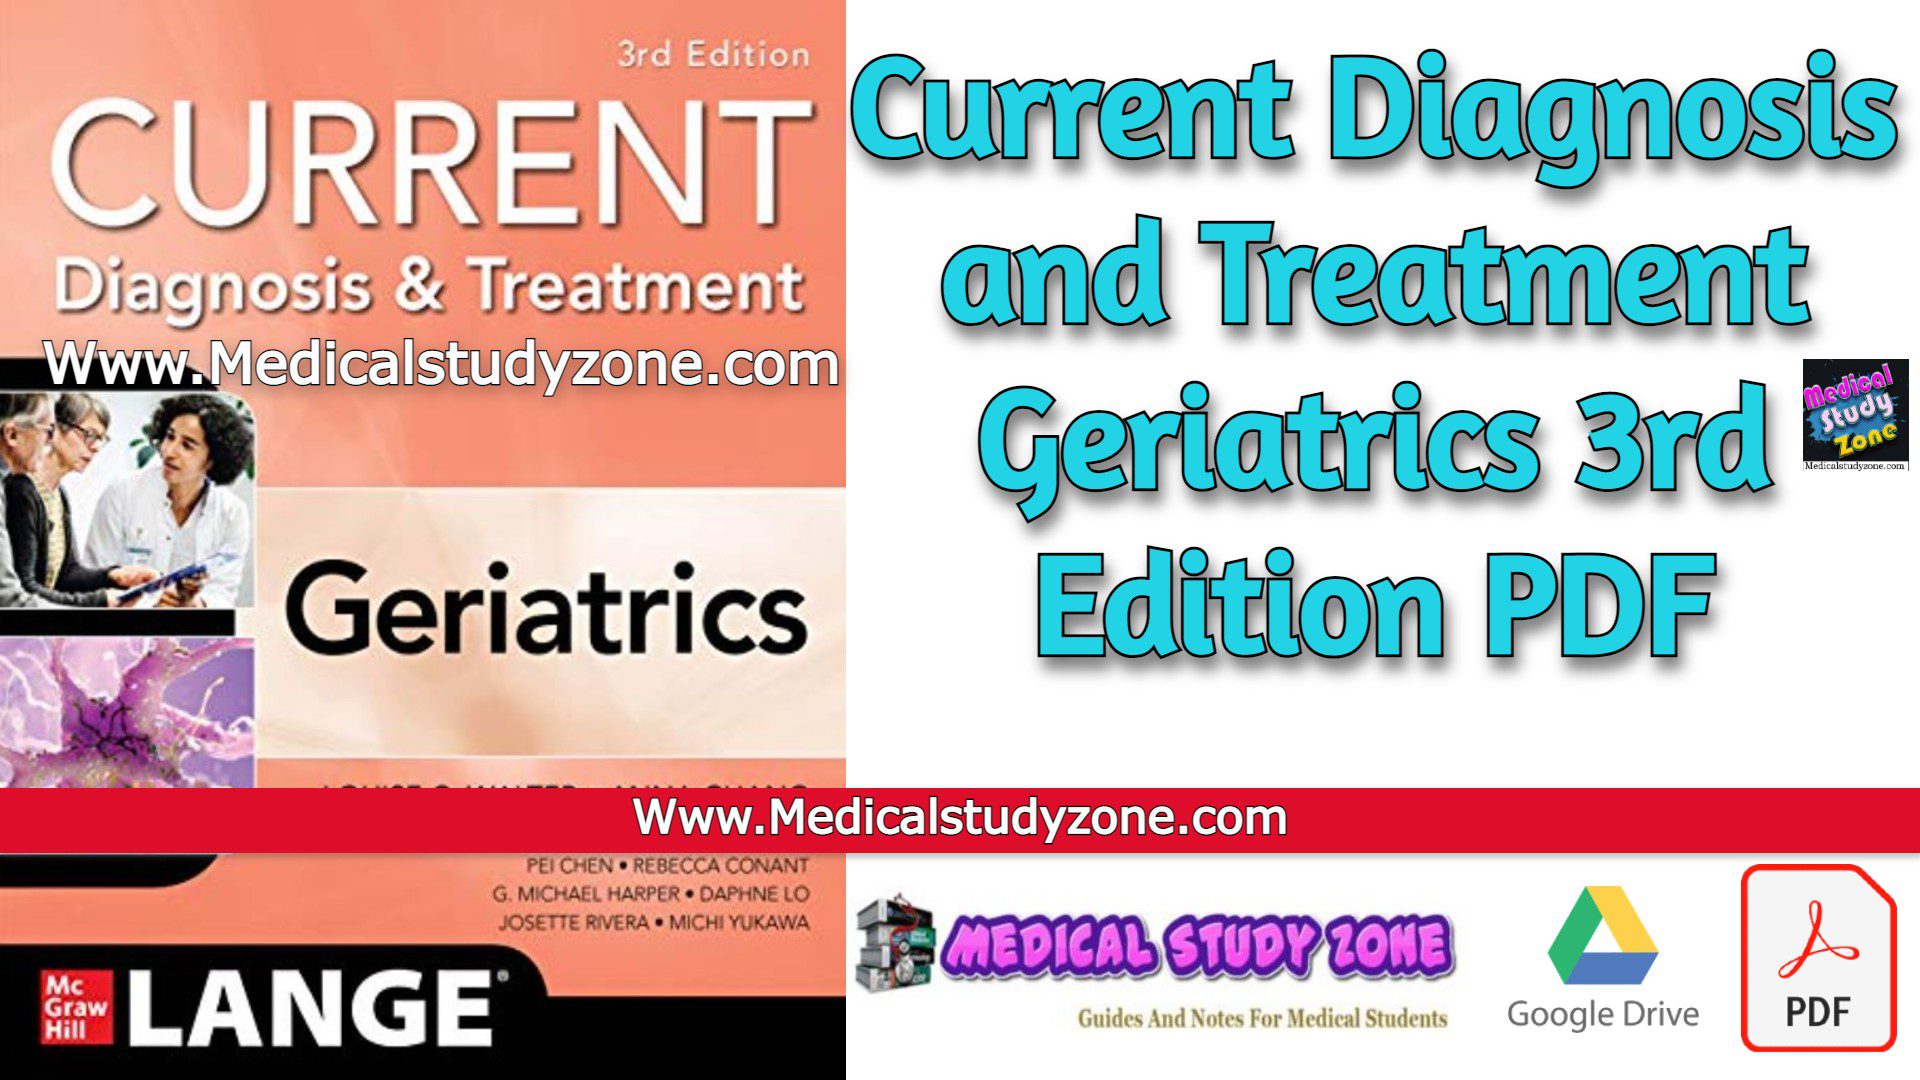 Current Diagnosis and Treatment Geriatrics 3rd Edition PDF Free